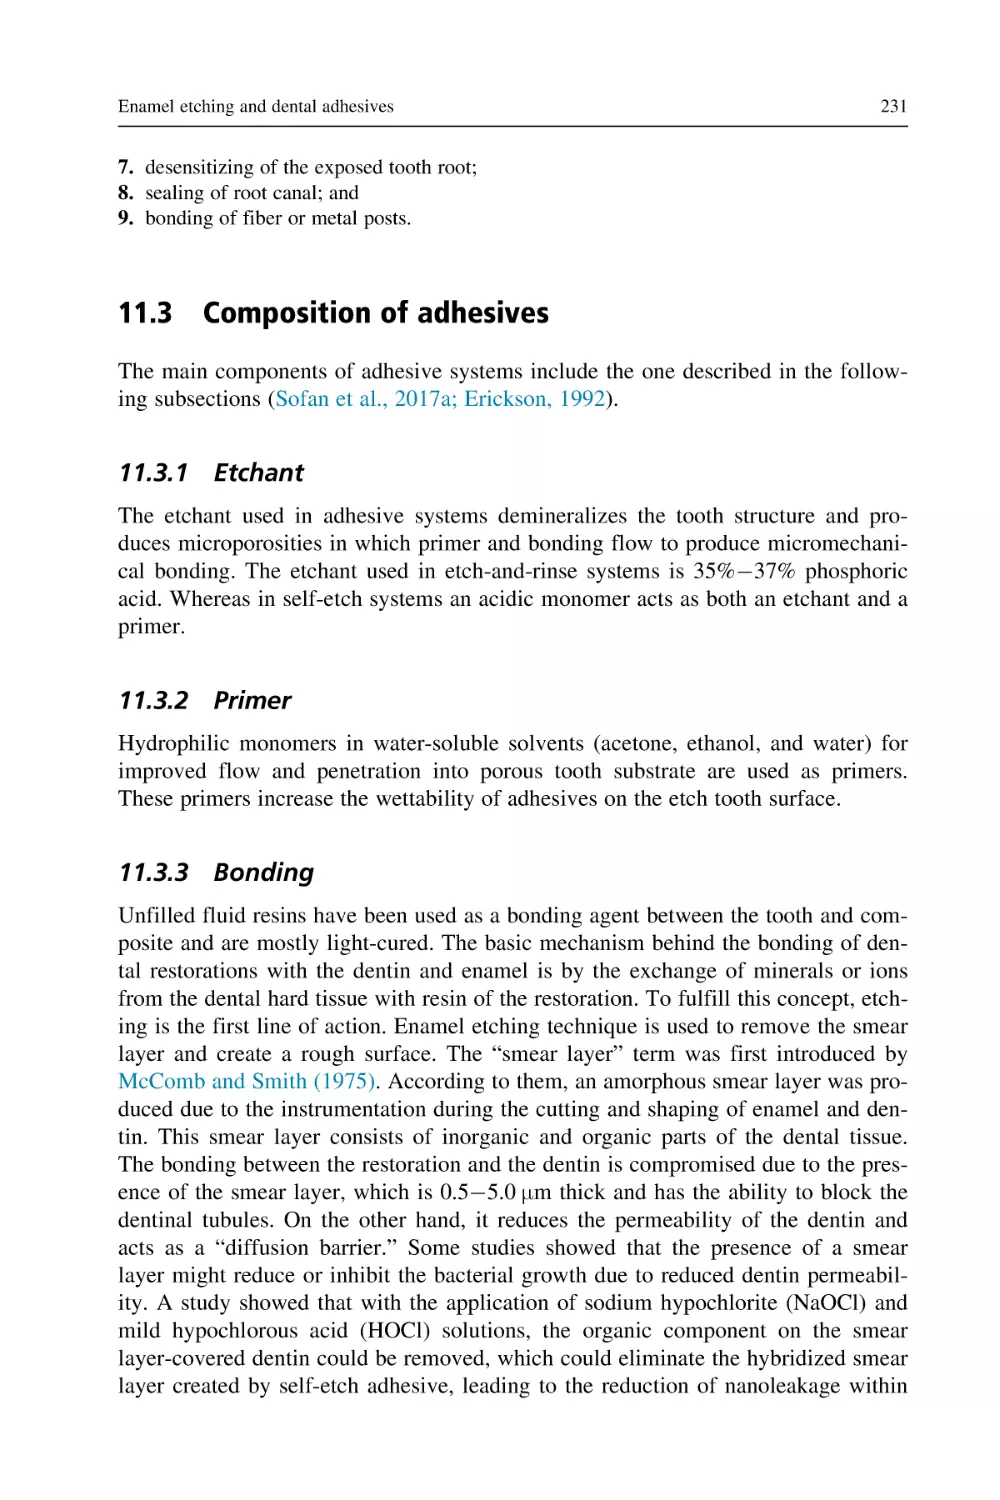 11.3 Composition of adhesives
11.3.1 Etchant
11.3.2 Primer
11.3.3 Bonding